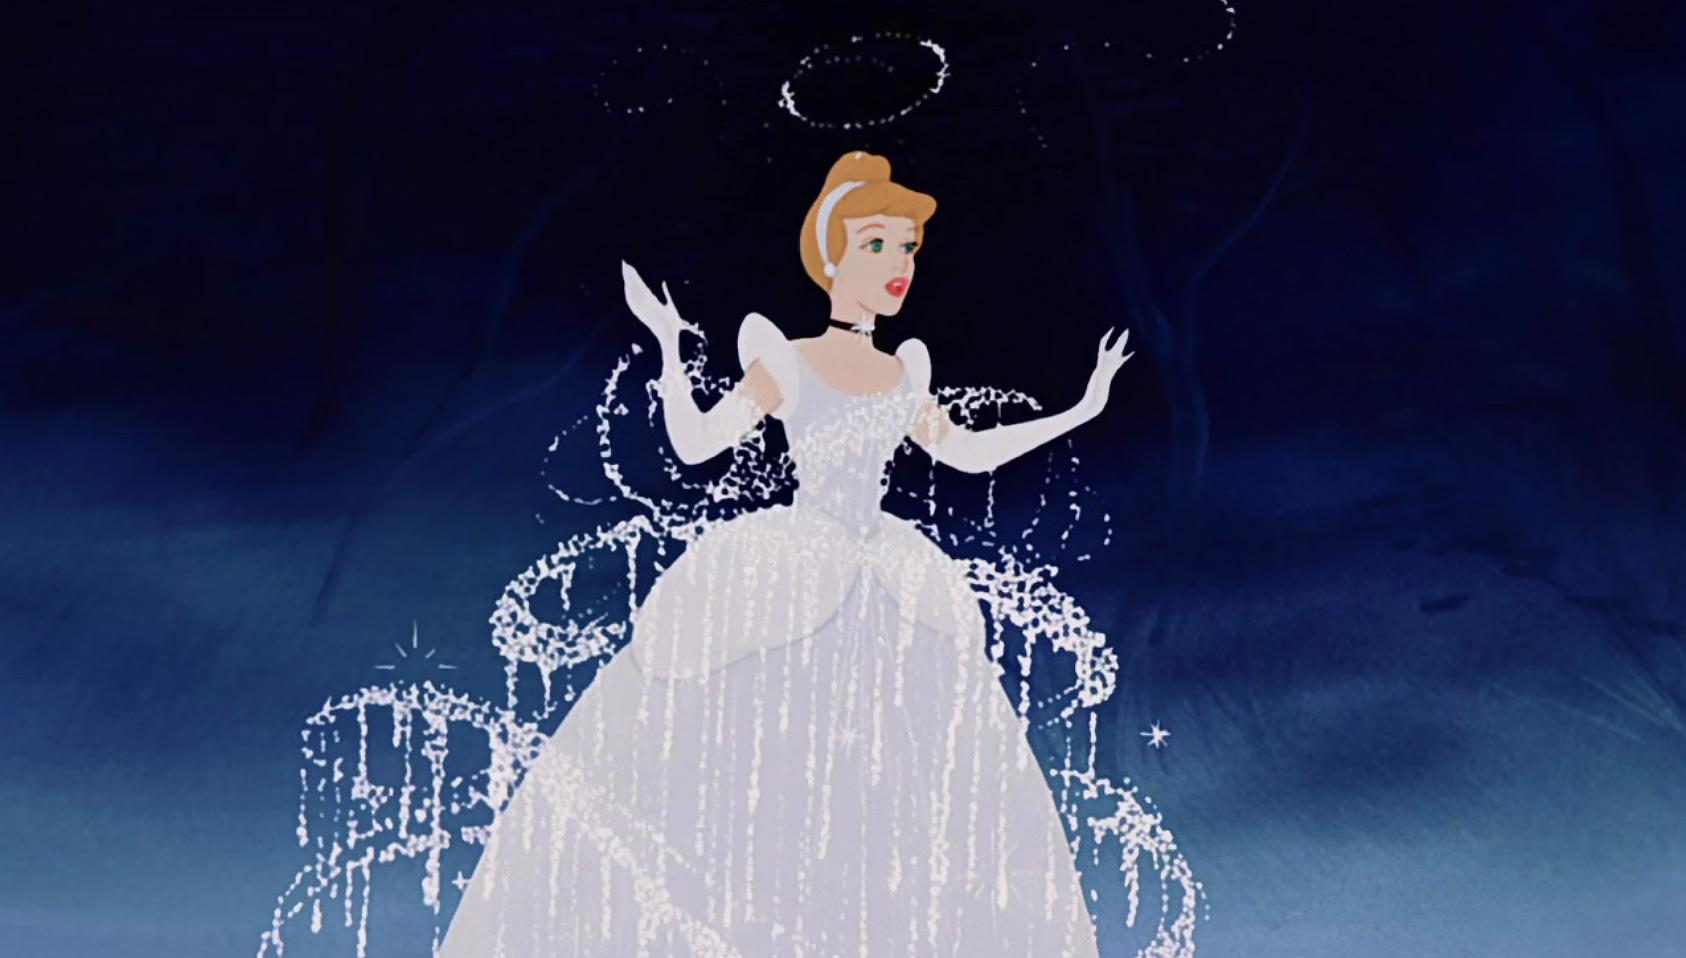 Screenshot of Cinderella transforming in Disney animation film.